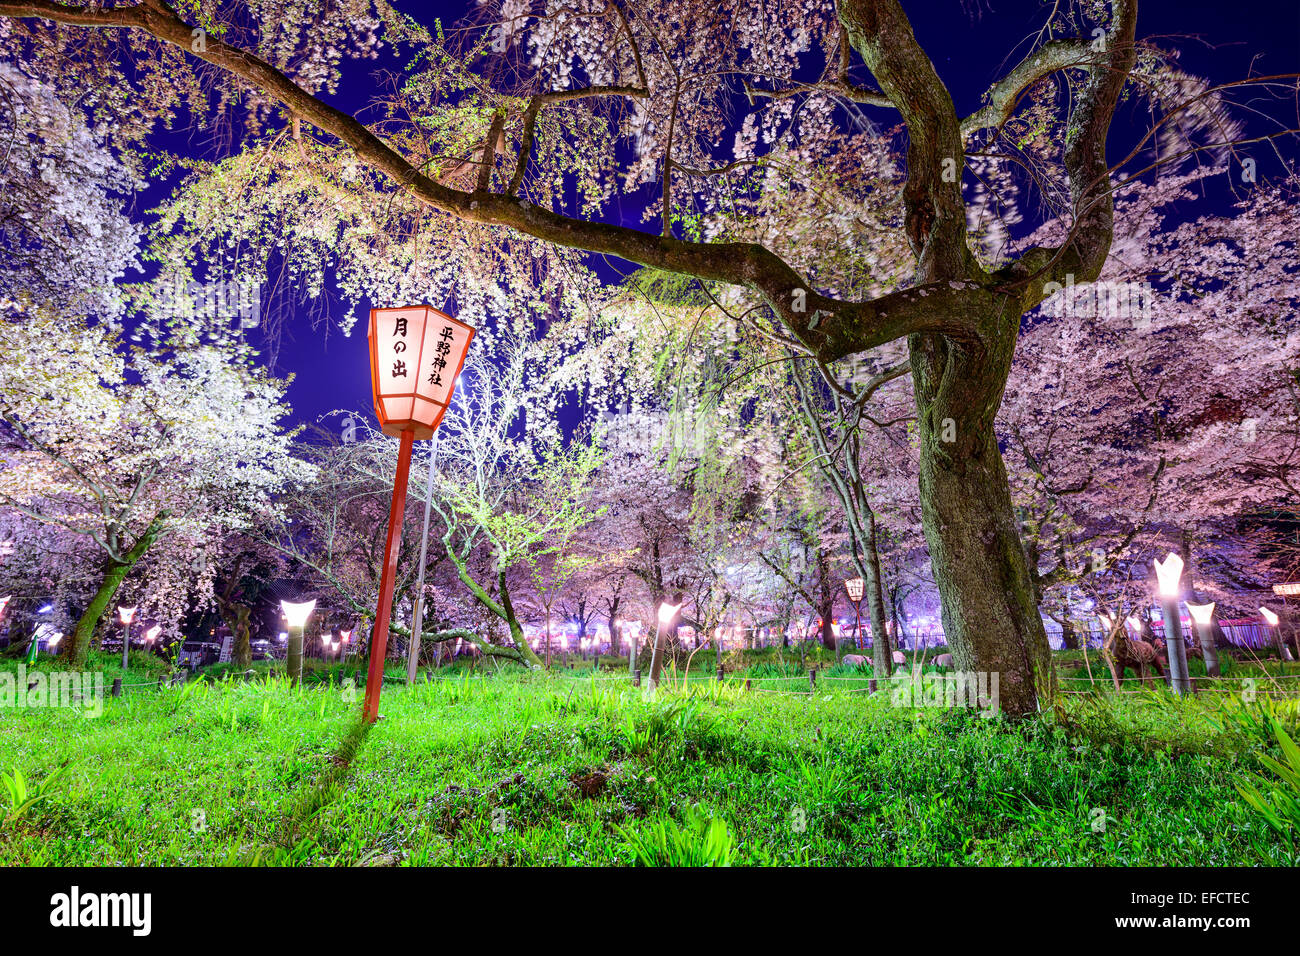 Kyoto, Japan am Festivalgelände Hirano Tempel im Frühjahr. Die Laterne liest "Mondaufgang, Hirano Tempel" Stockfoto